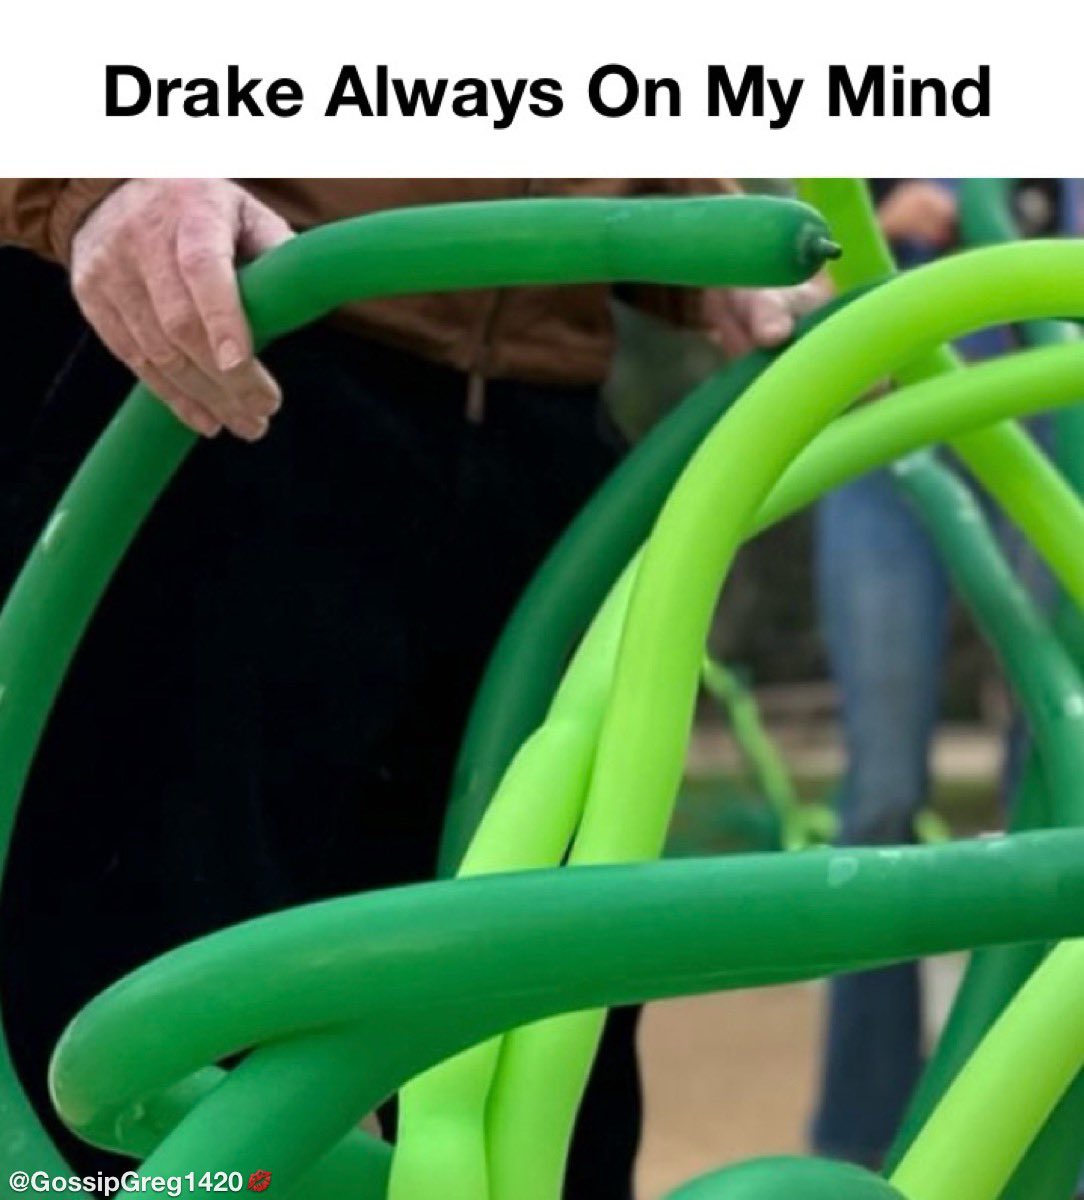 I’m checking myself into Drake meme rehab. 👠